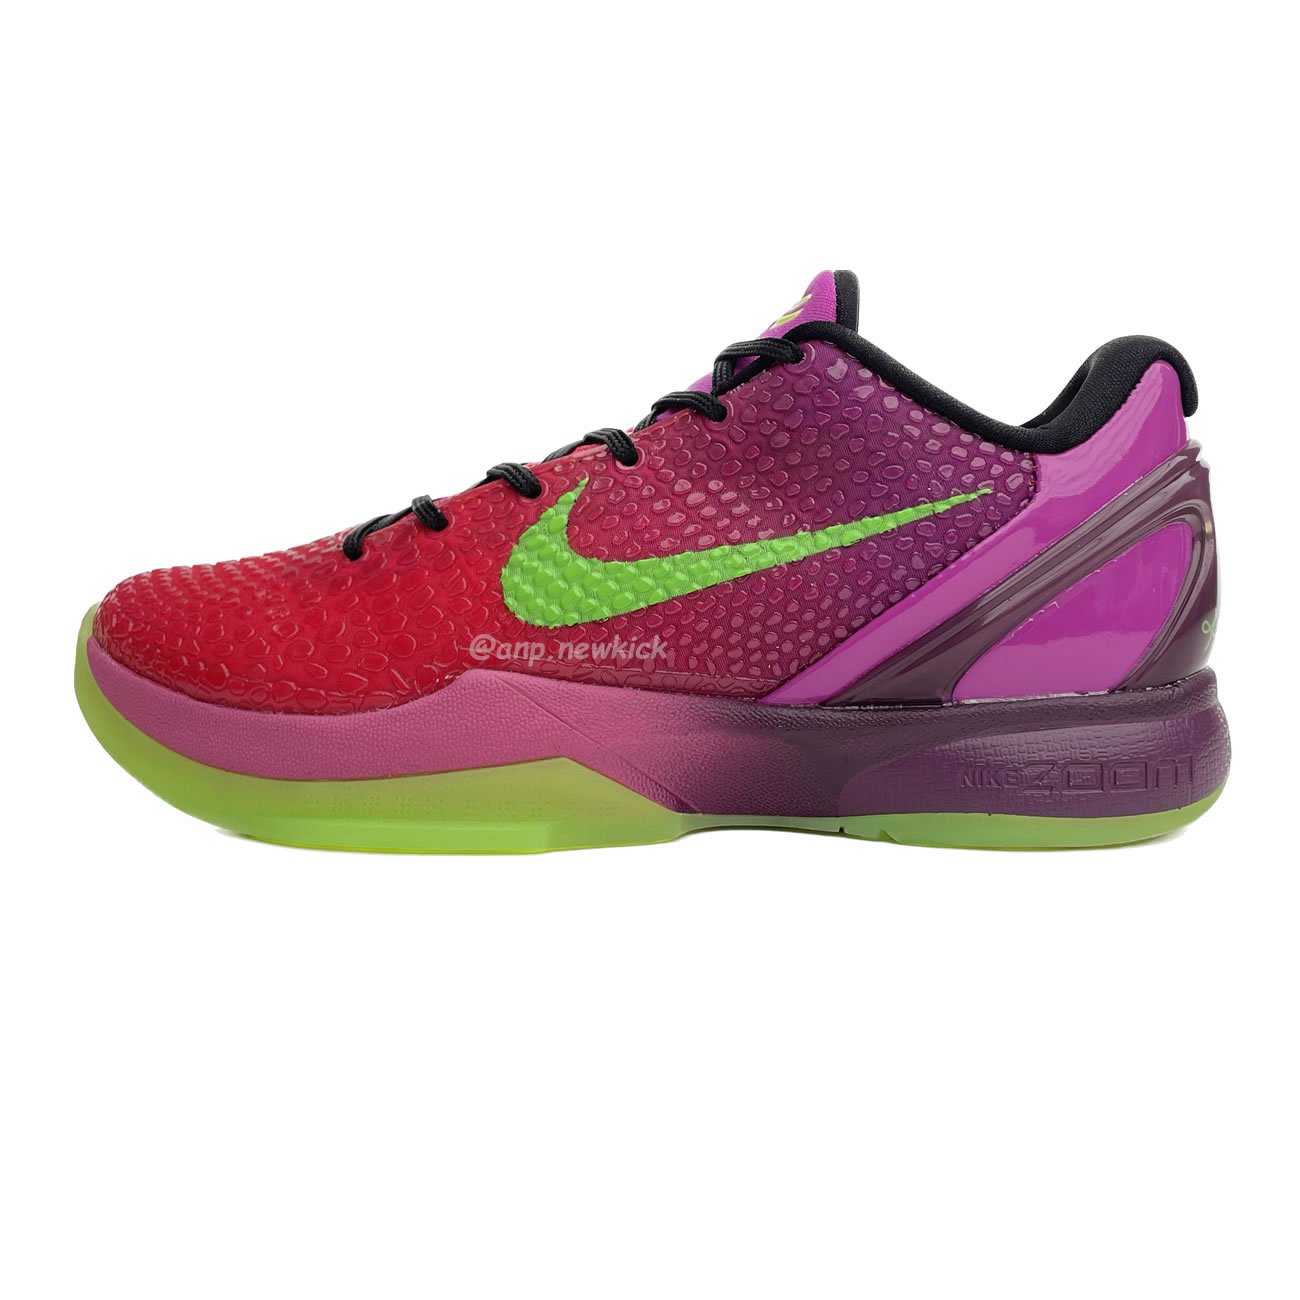 Nike Kobe 6 Protro Mambacurial Pe2023 102 (1) - newkick.org